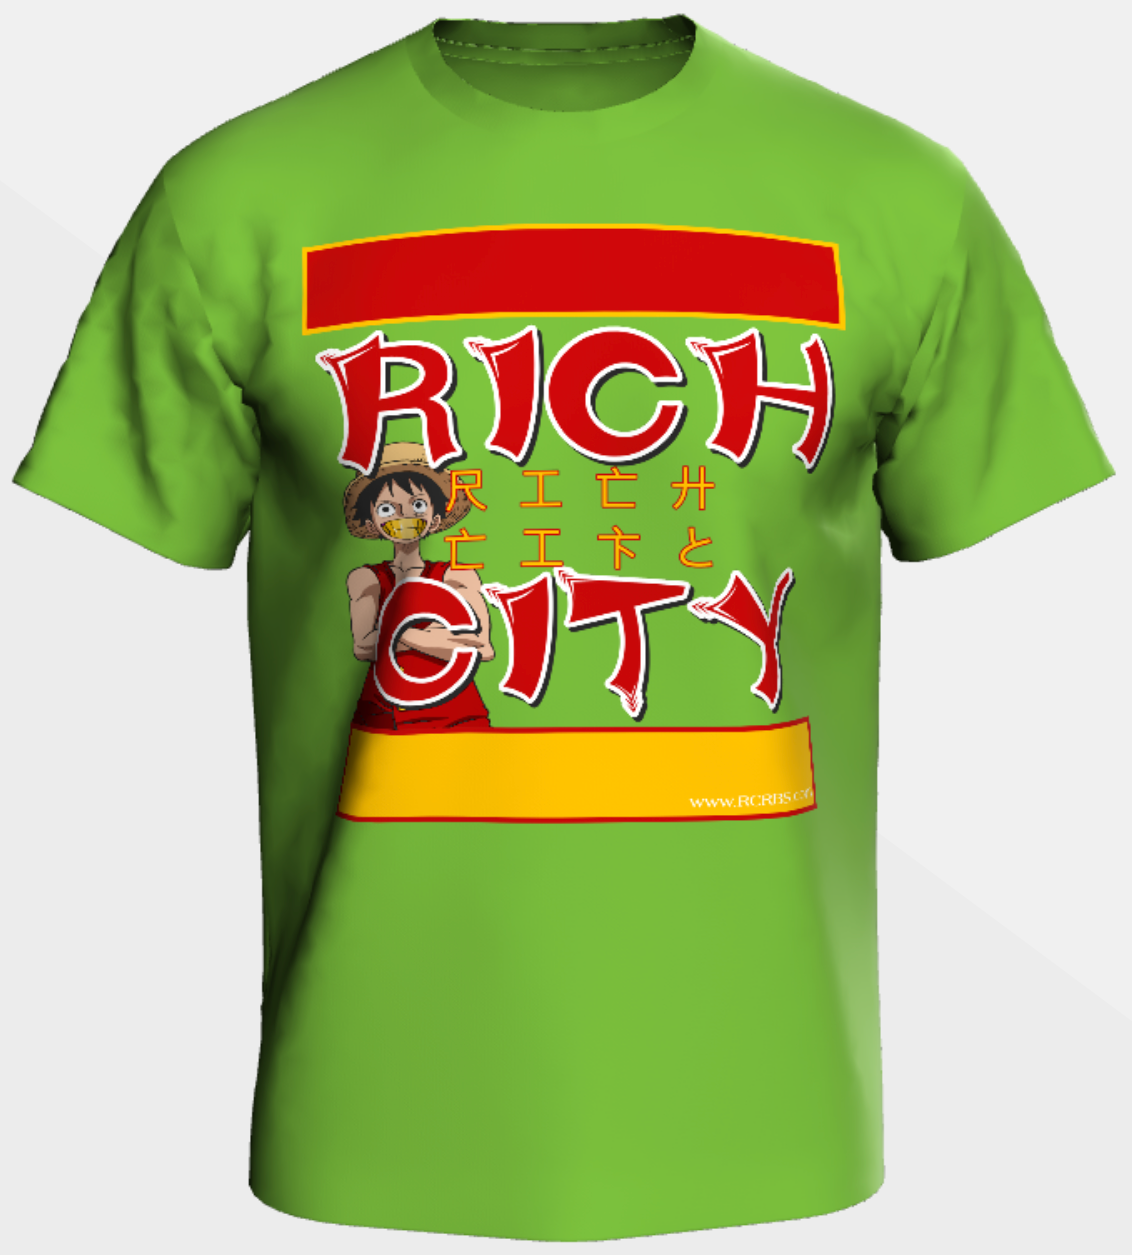 New Raffle RichCity "OnePieceCranks" T-Shirt